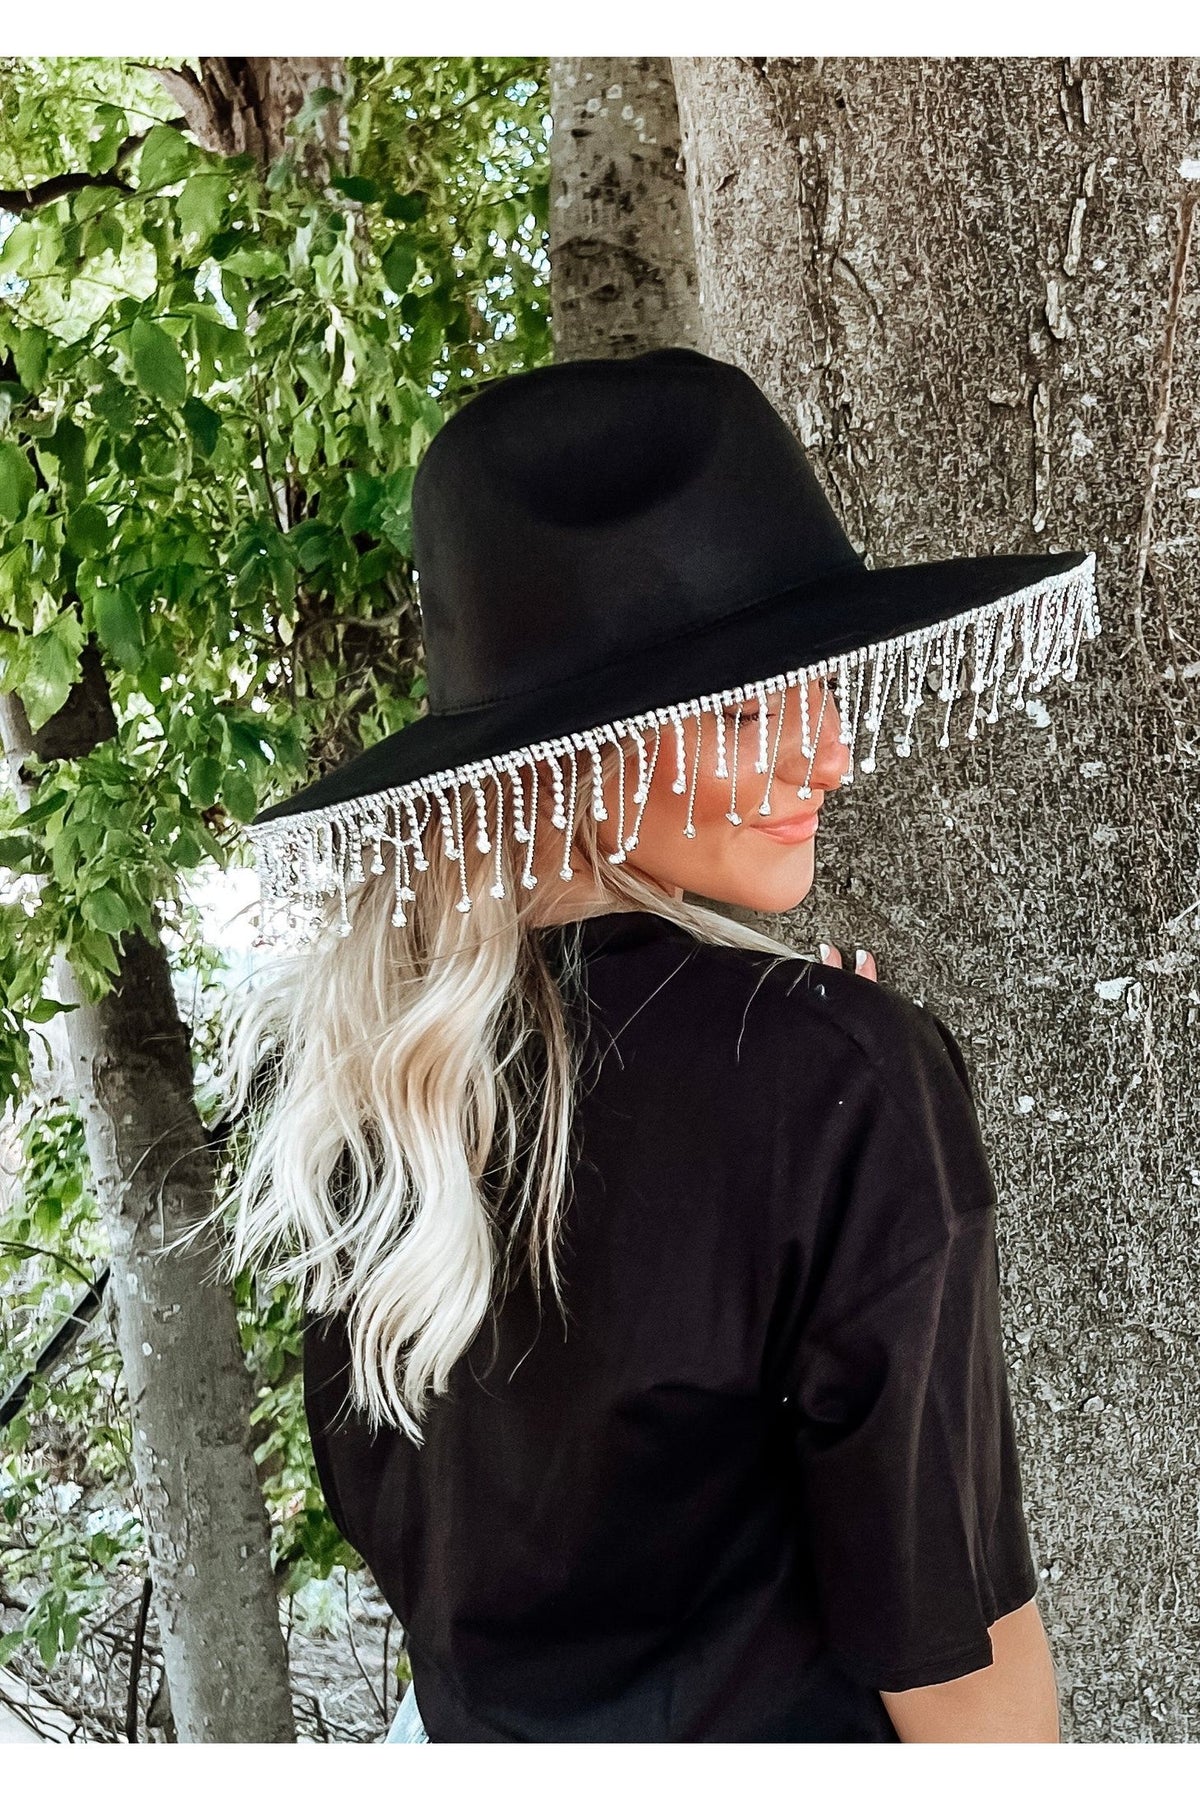 Alexa Fringes Rhinestones Cowboy Hat-Hats-KCoutureBoutique, women's boutique in Bossier City, Louisiana